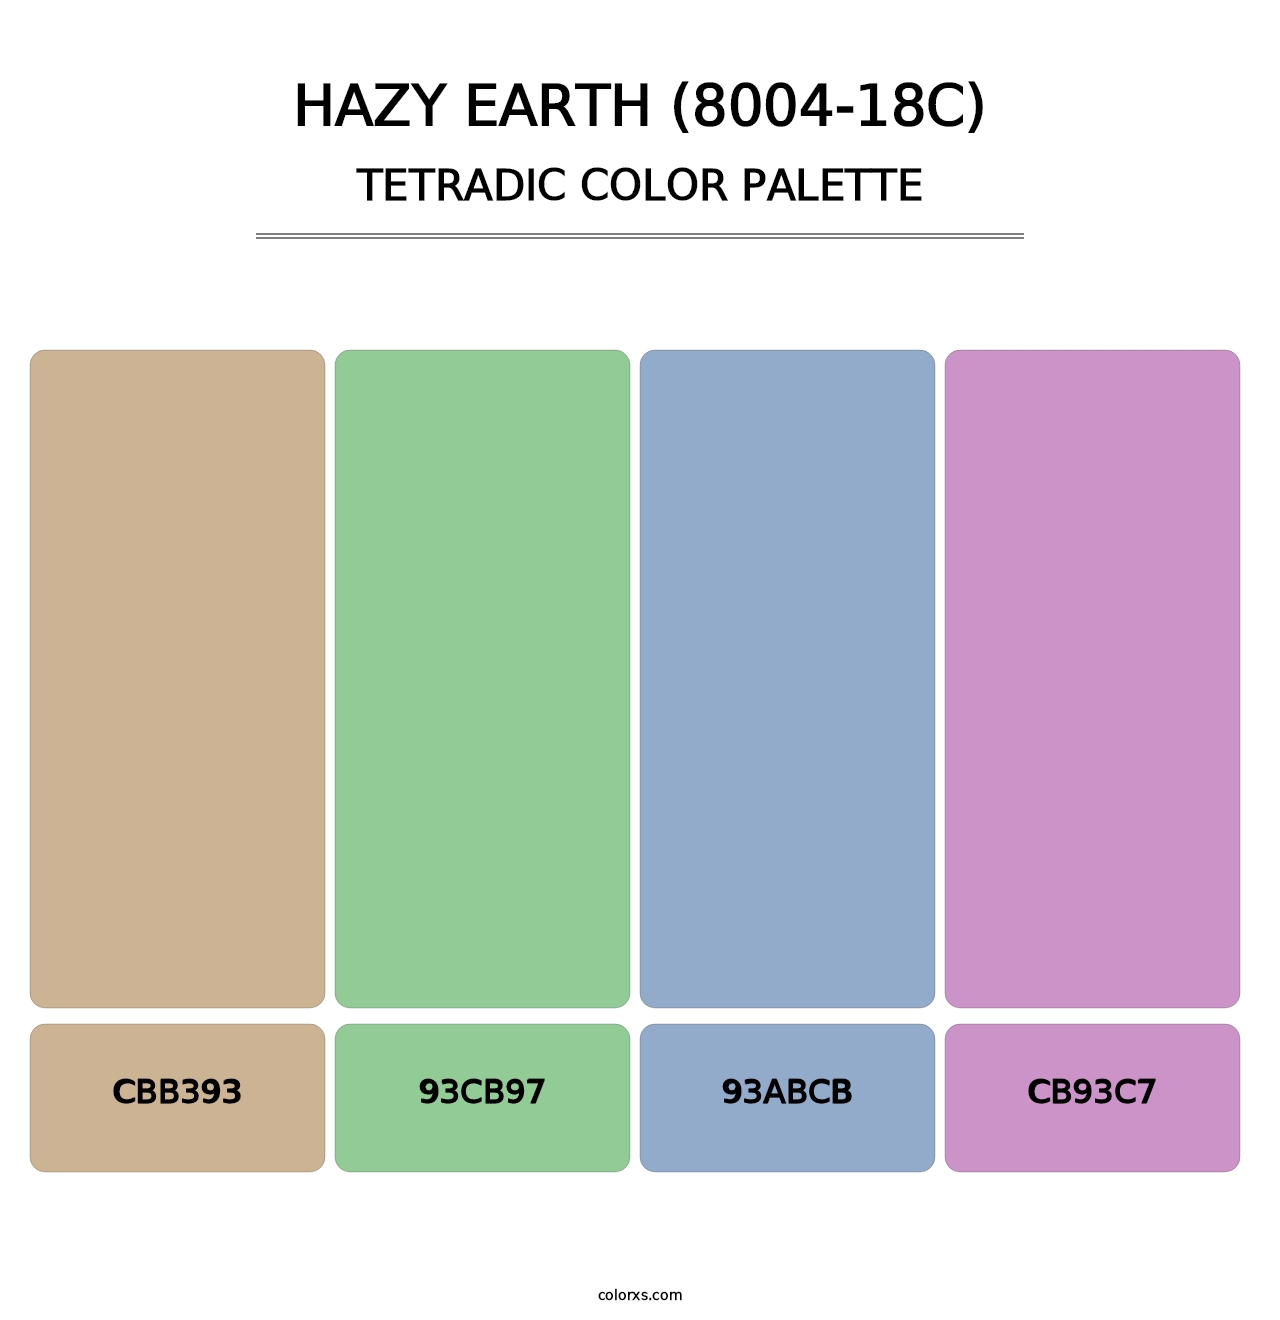 Hazy Earth (8004-18C) - Tetradic Color Palette